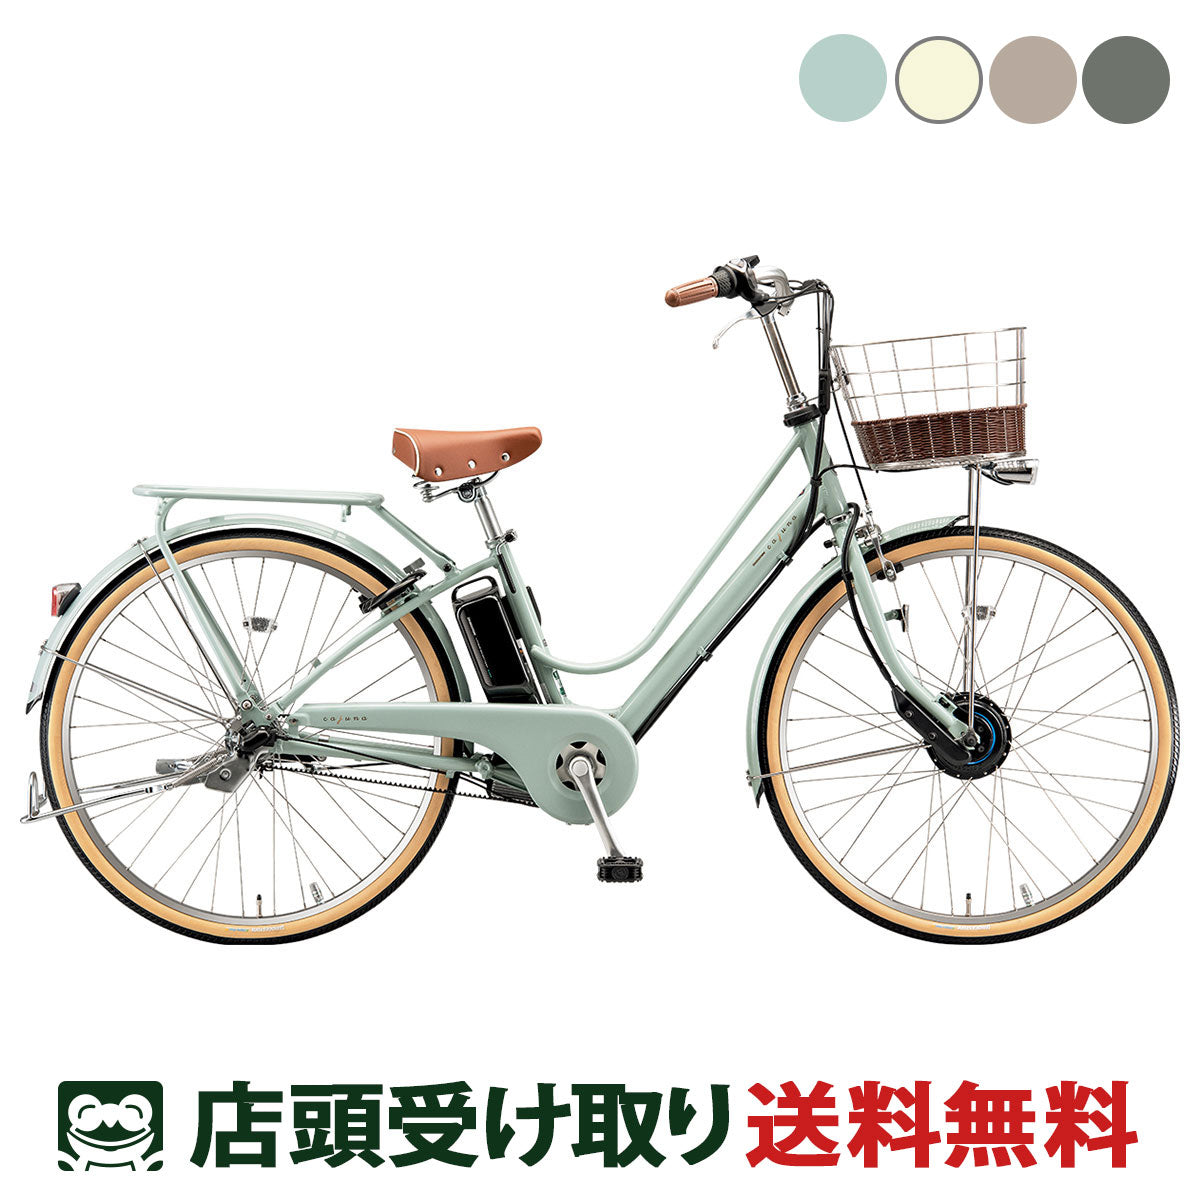 LaLa-Smart 22インチ 電動自転車 自転車 ママチャリ - 自転車本体